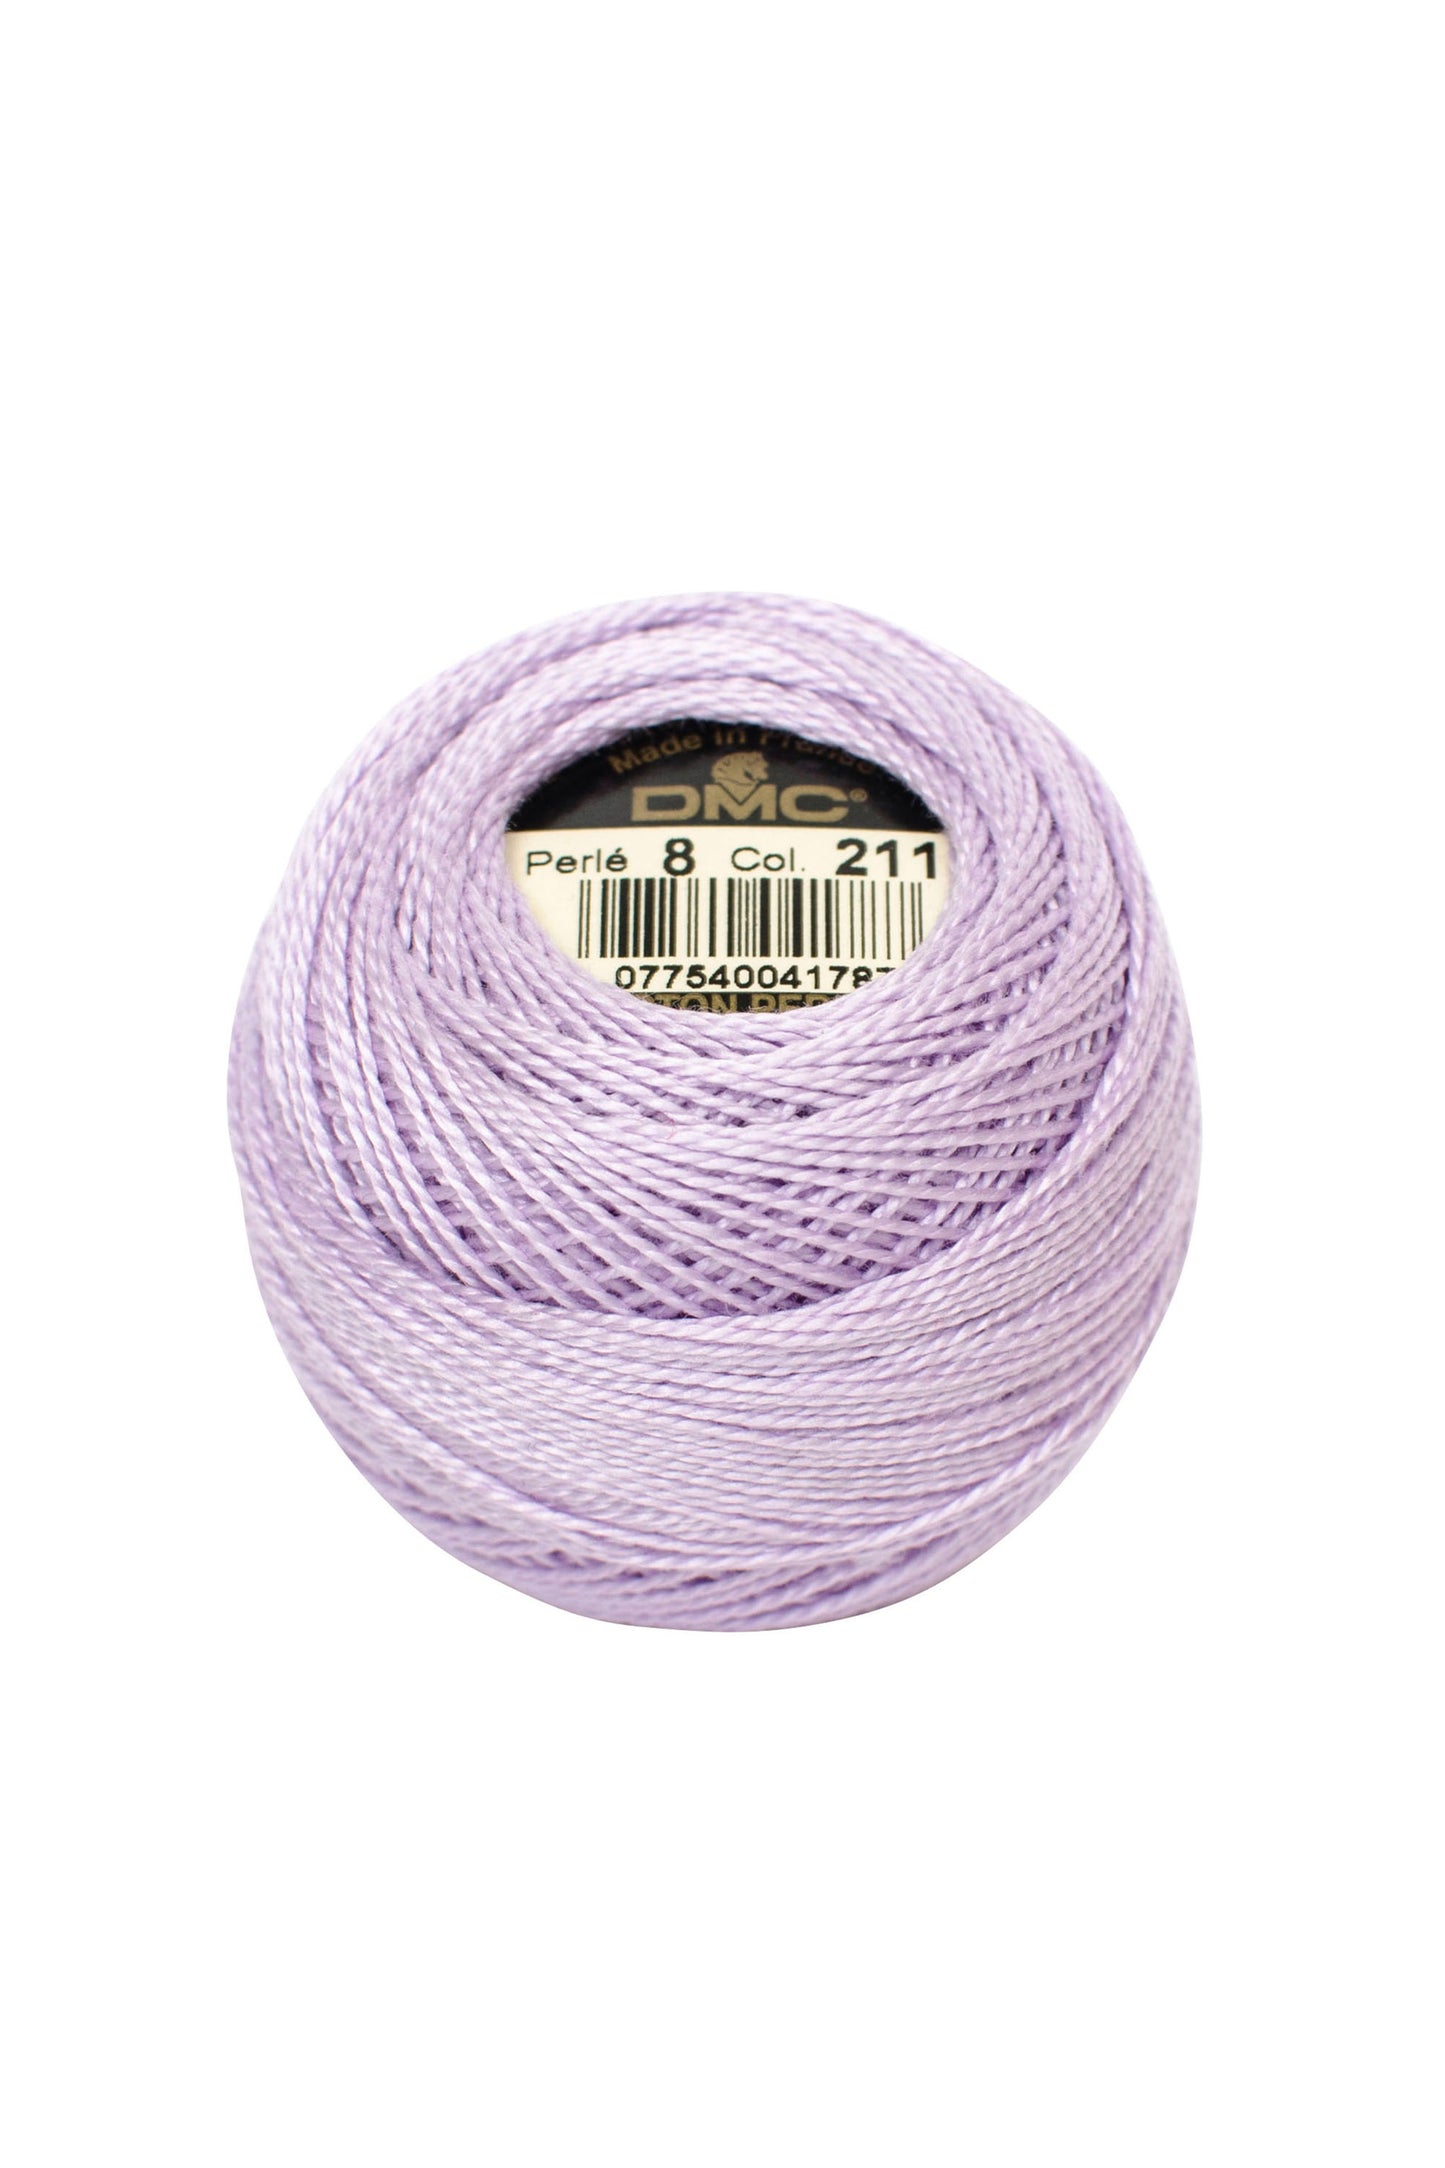 211 Light Lavender - DMC #8 Perle Cotton Ball